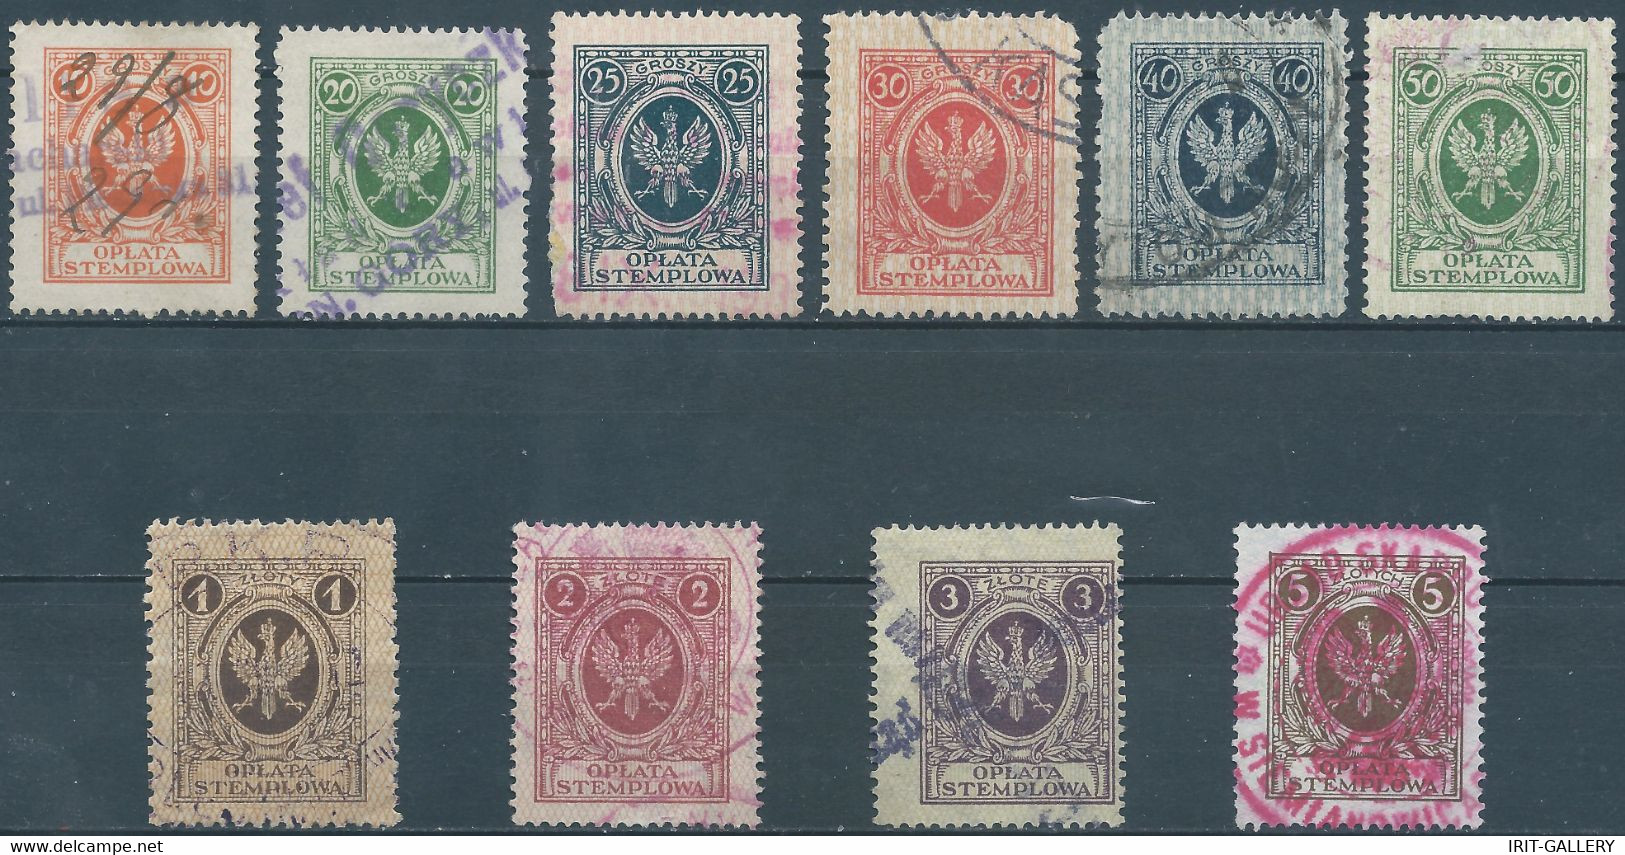 POLONIA-POLAND-POLSKA,Revenue Stamps Fiscal Tax 1925-1929 (OPLATA STEMPLOWA)Used - Fiscaux